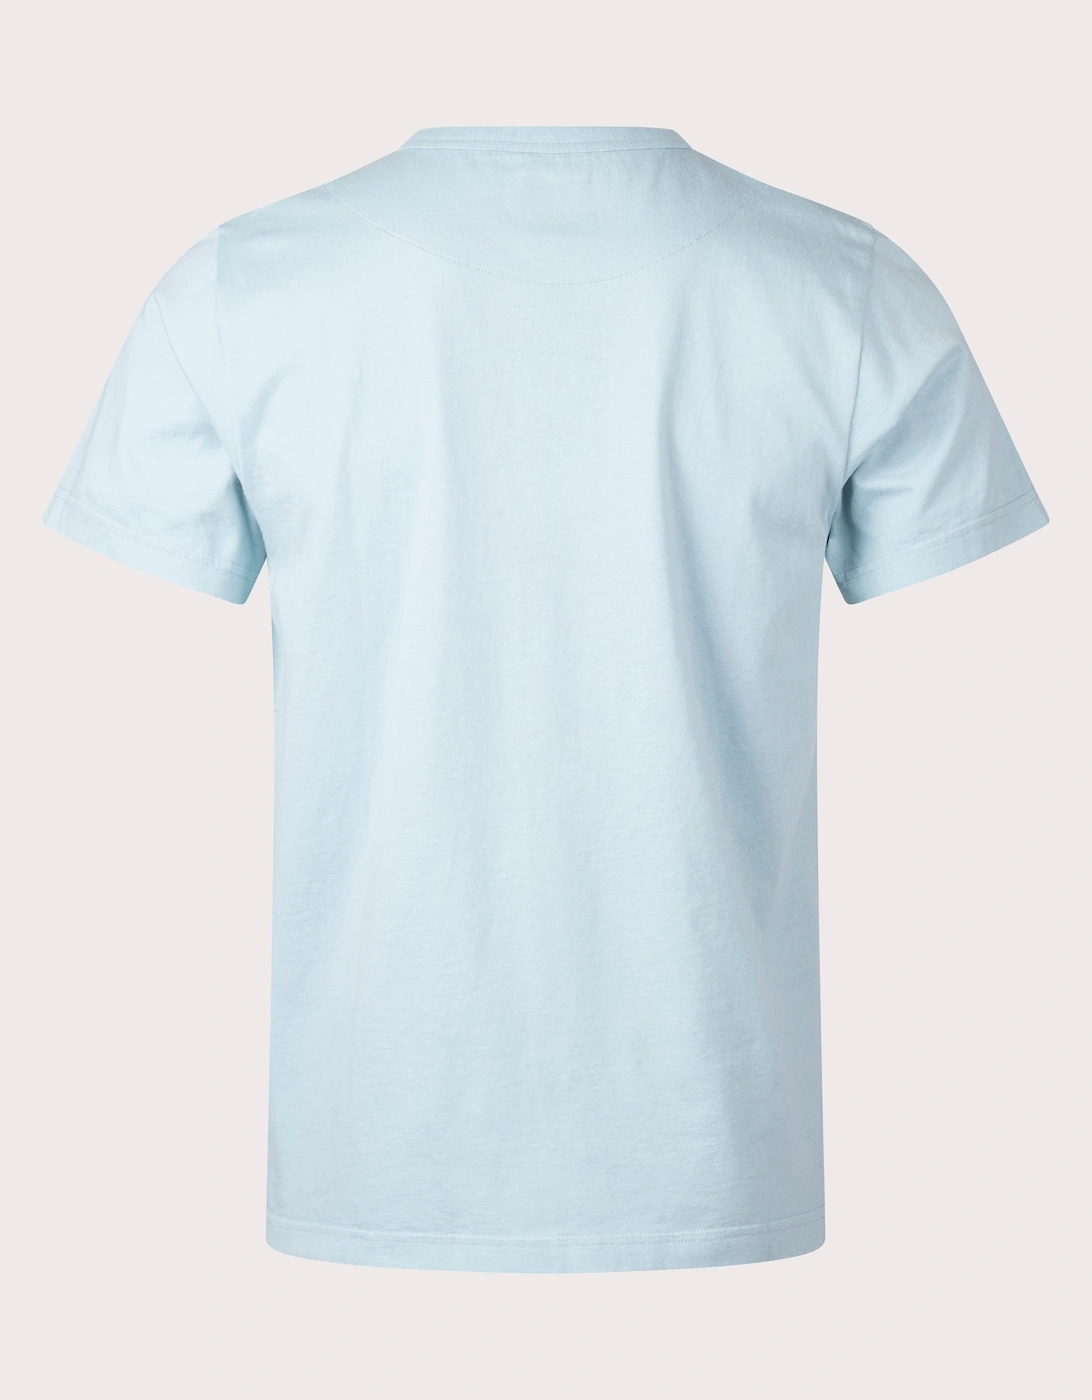 Prestleigh Chest Stripe T-Shirt